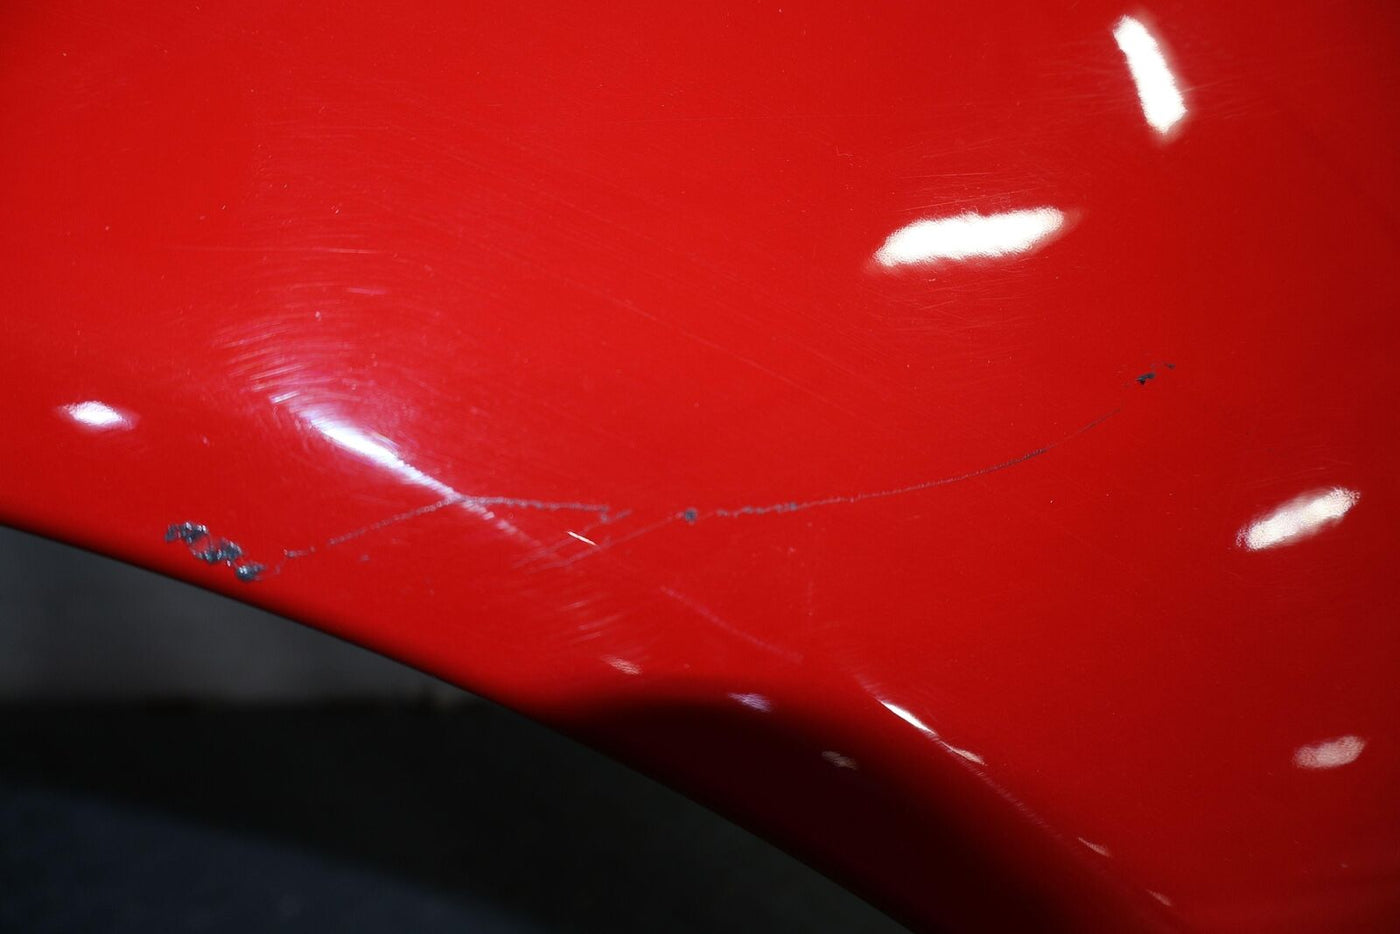 04-09 Cadillac XLR Right RH Rear Quarter Panel Skin (Victory Red 74U) Scratched